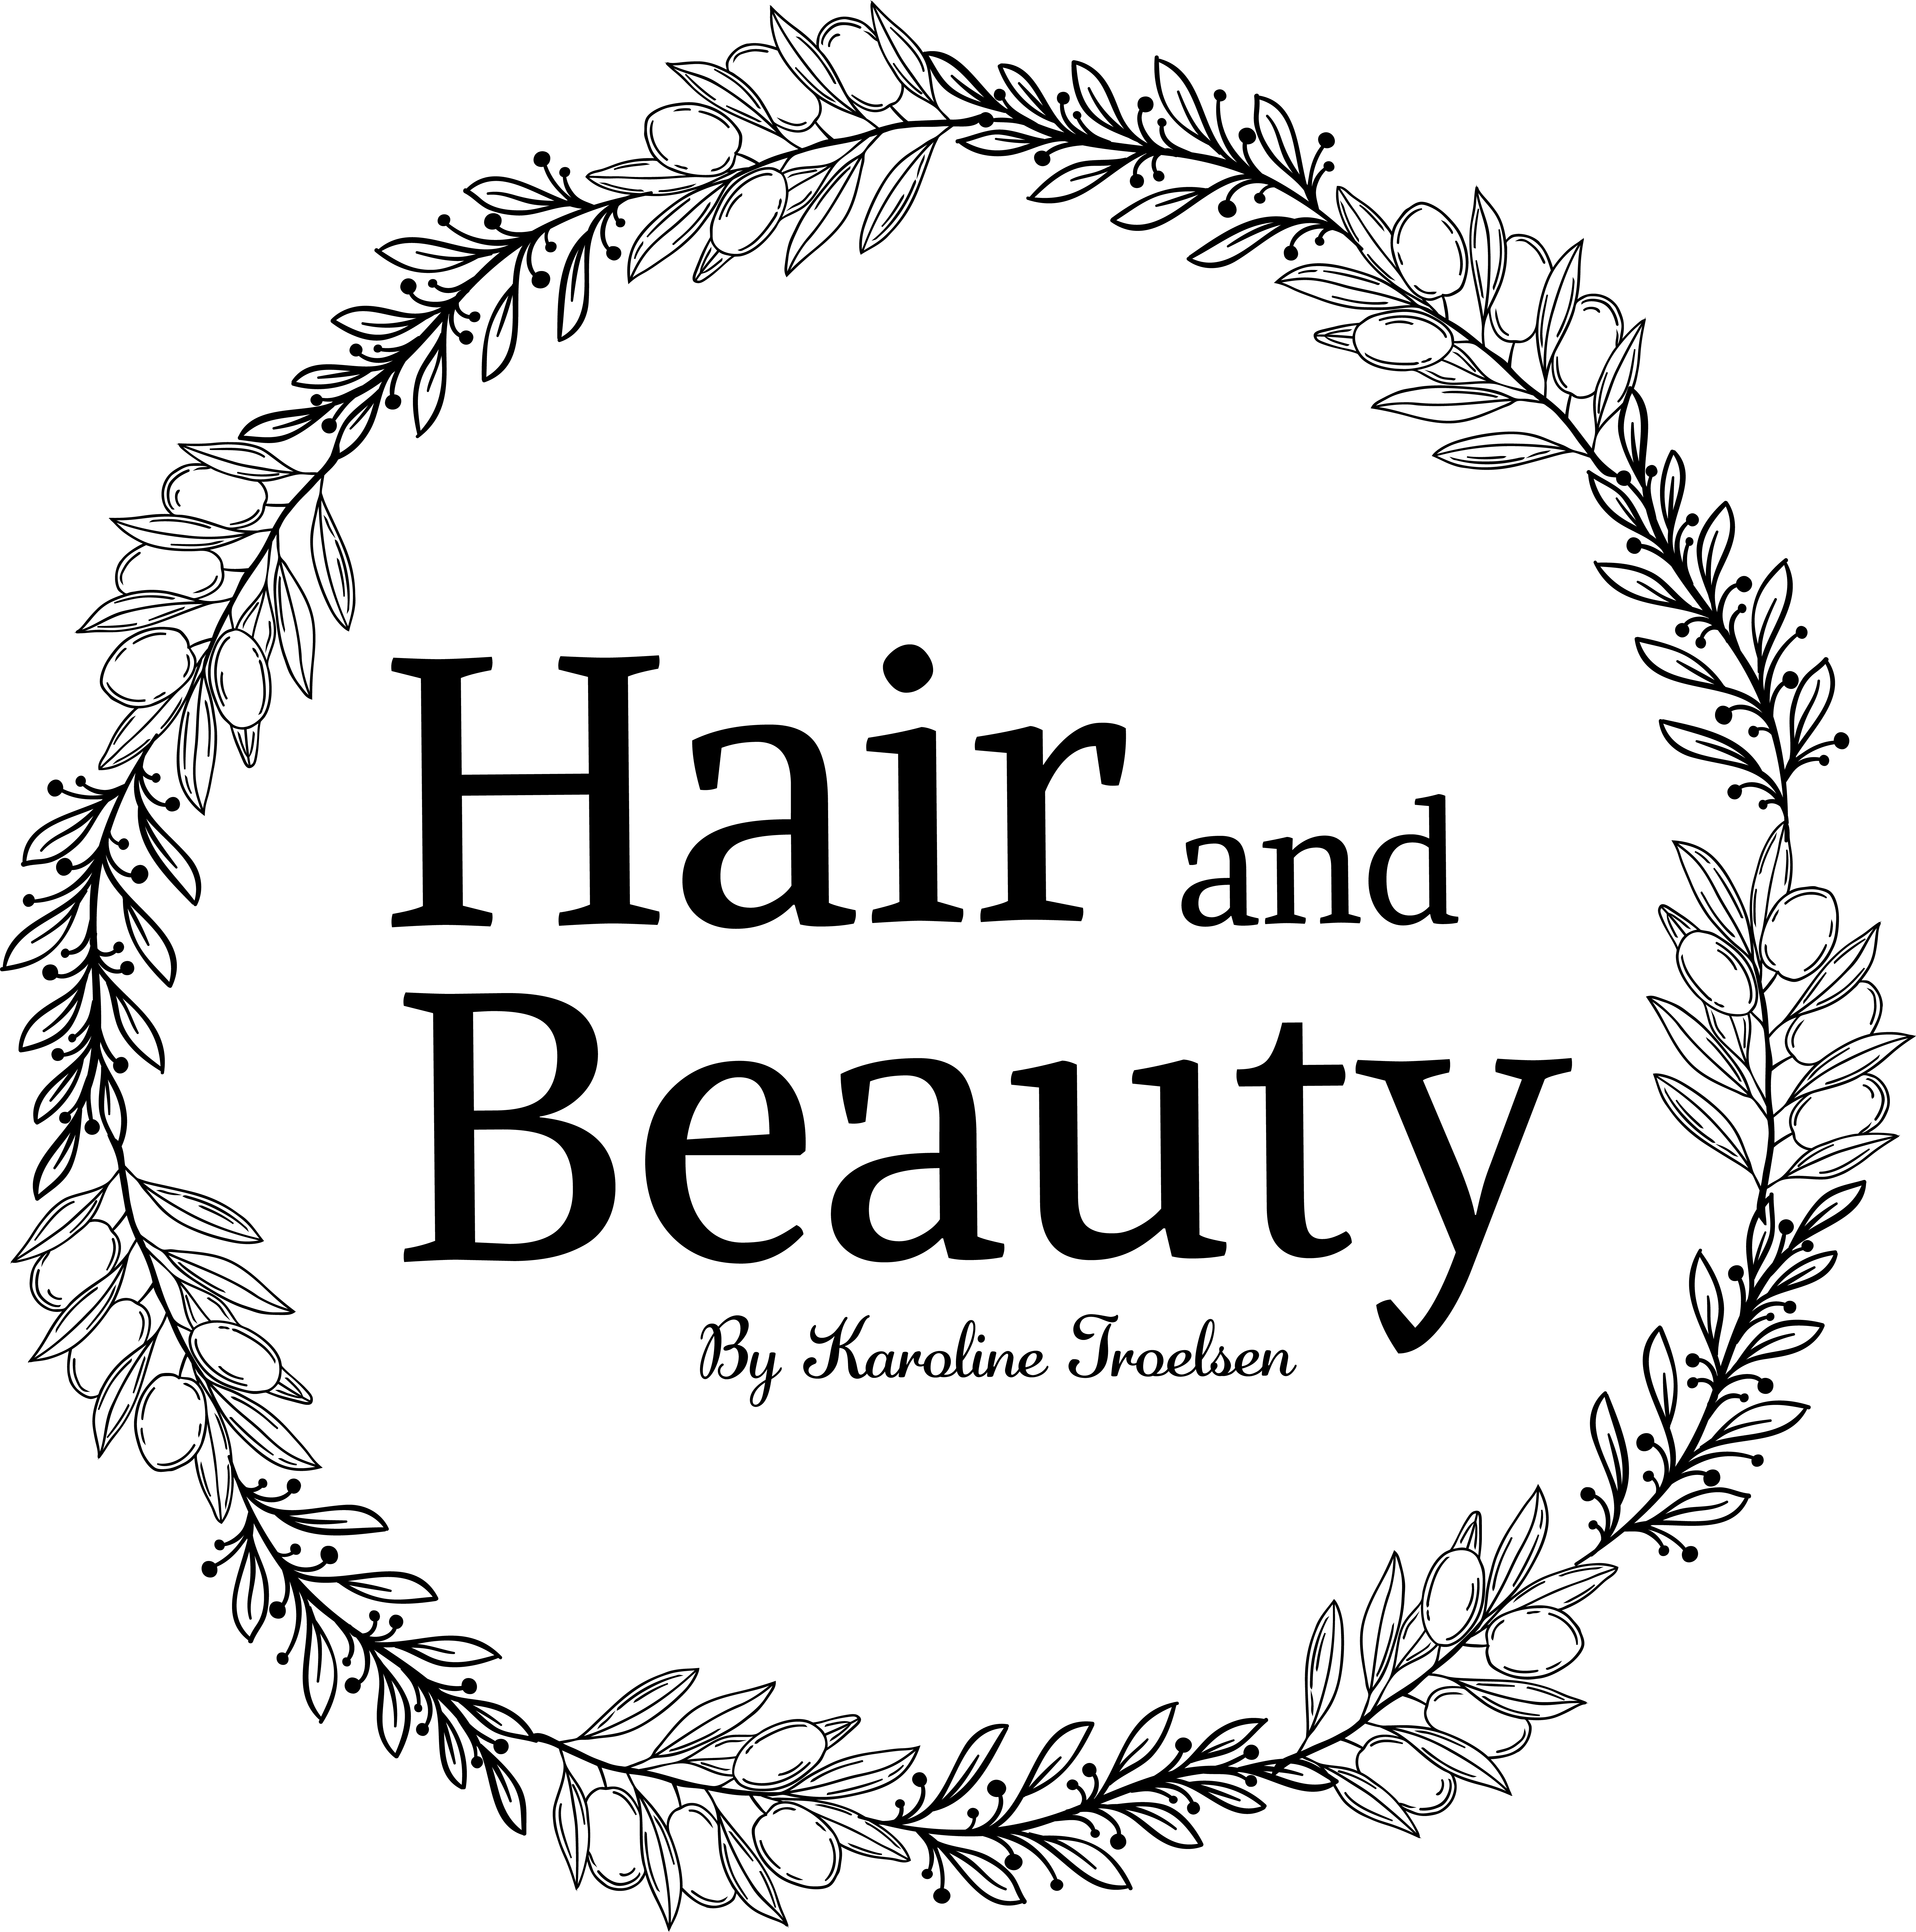 Hair and Beauty by Karoline Troelsen